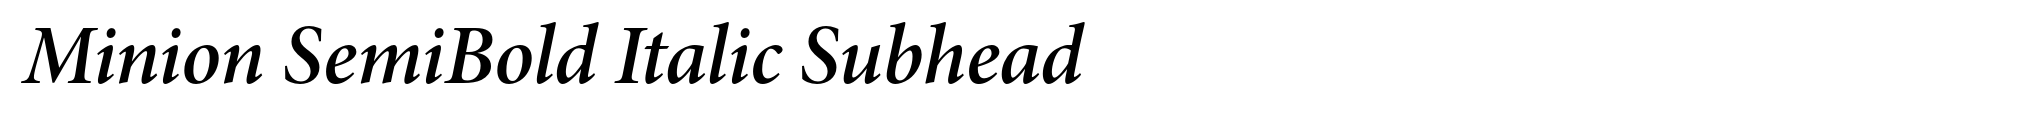 Minion SemiBold Italic Subhead image